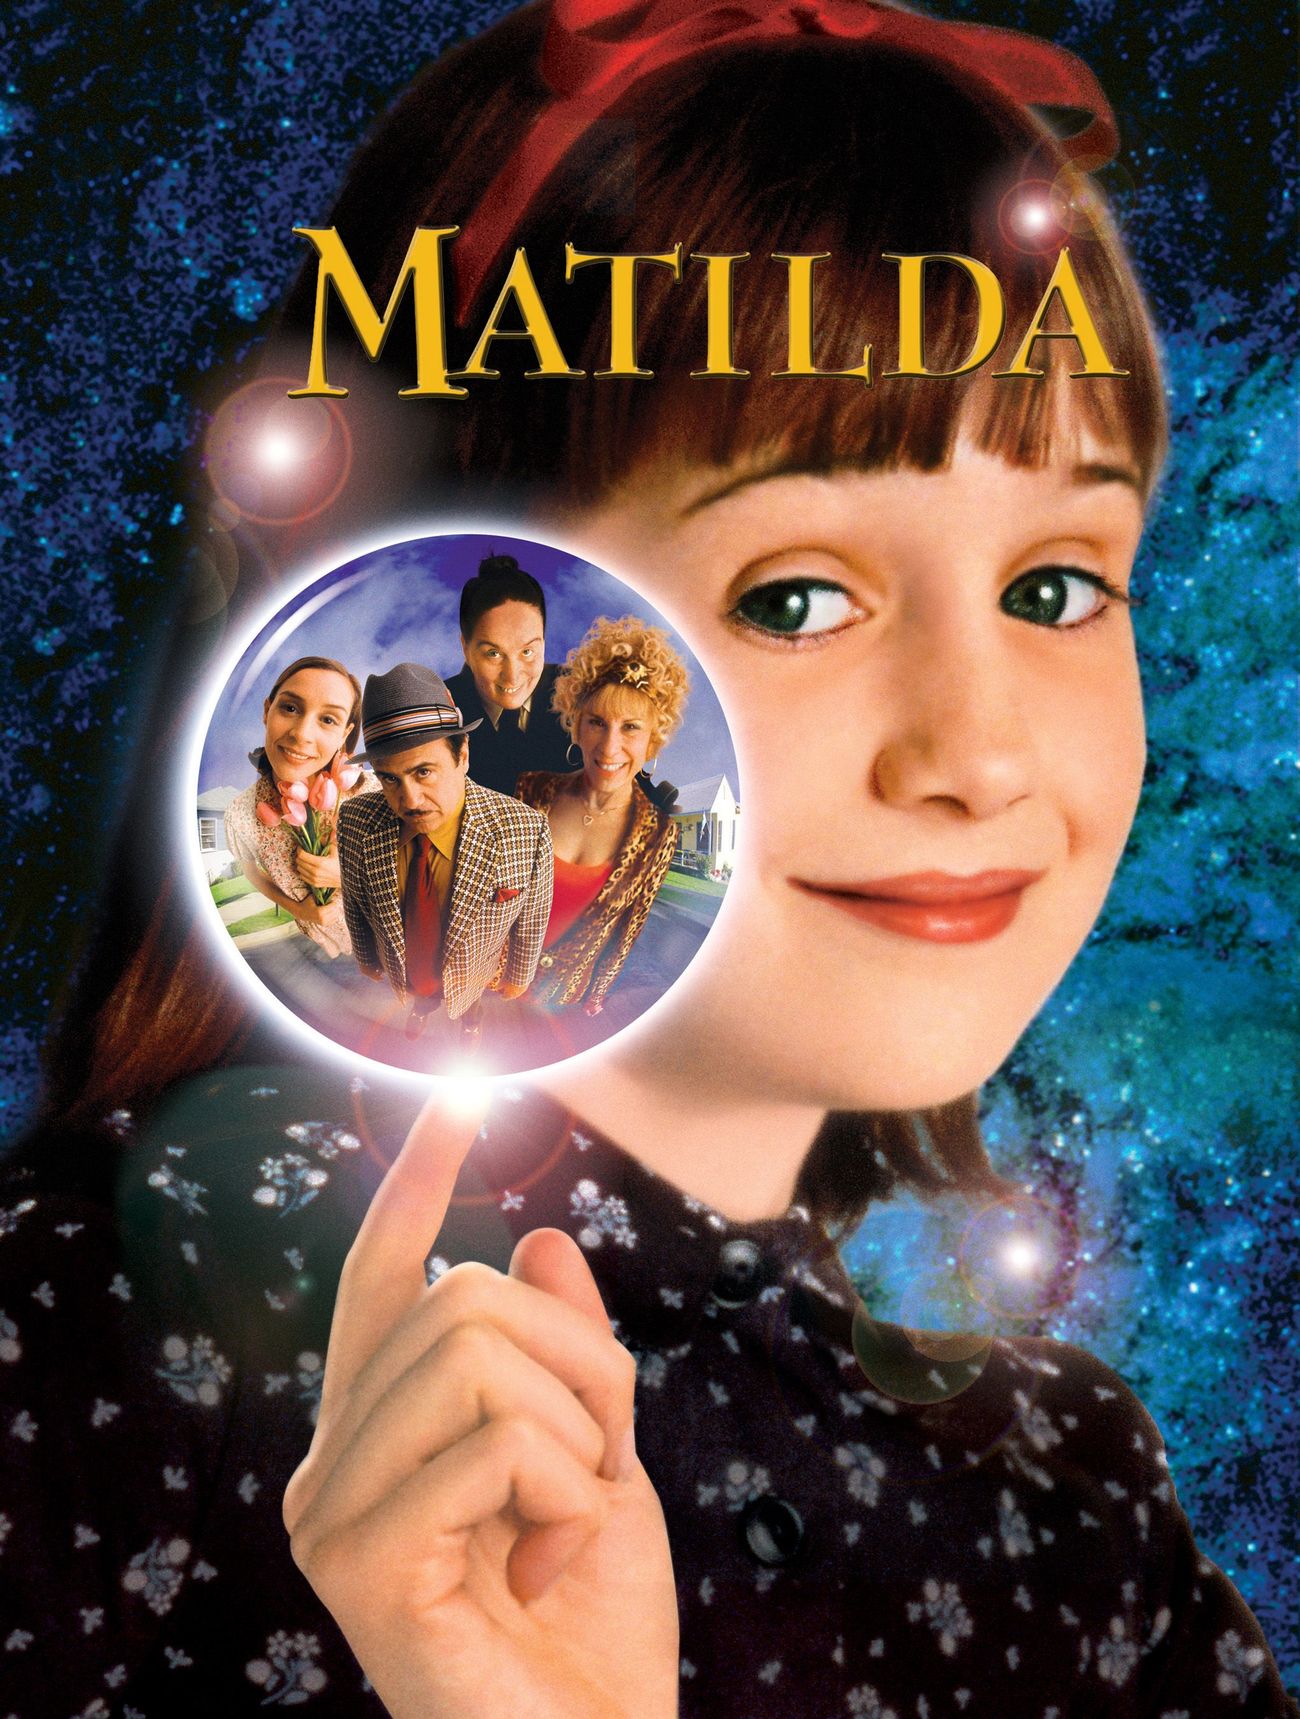 Matilda movie poster